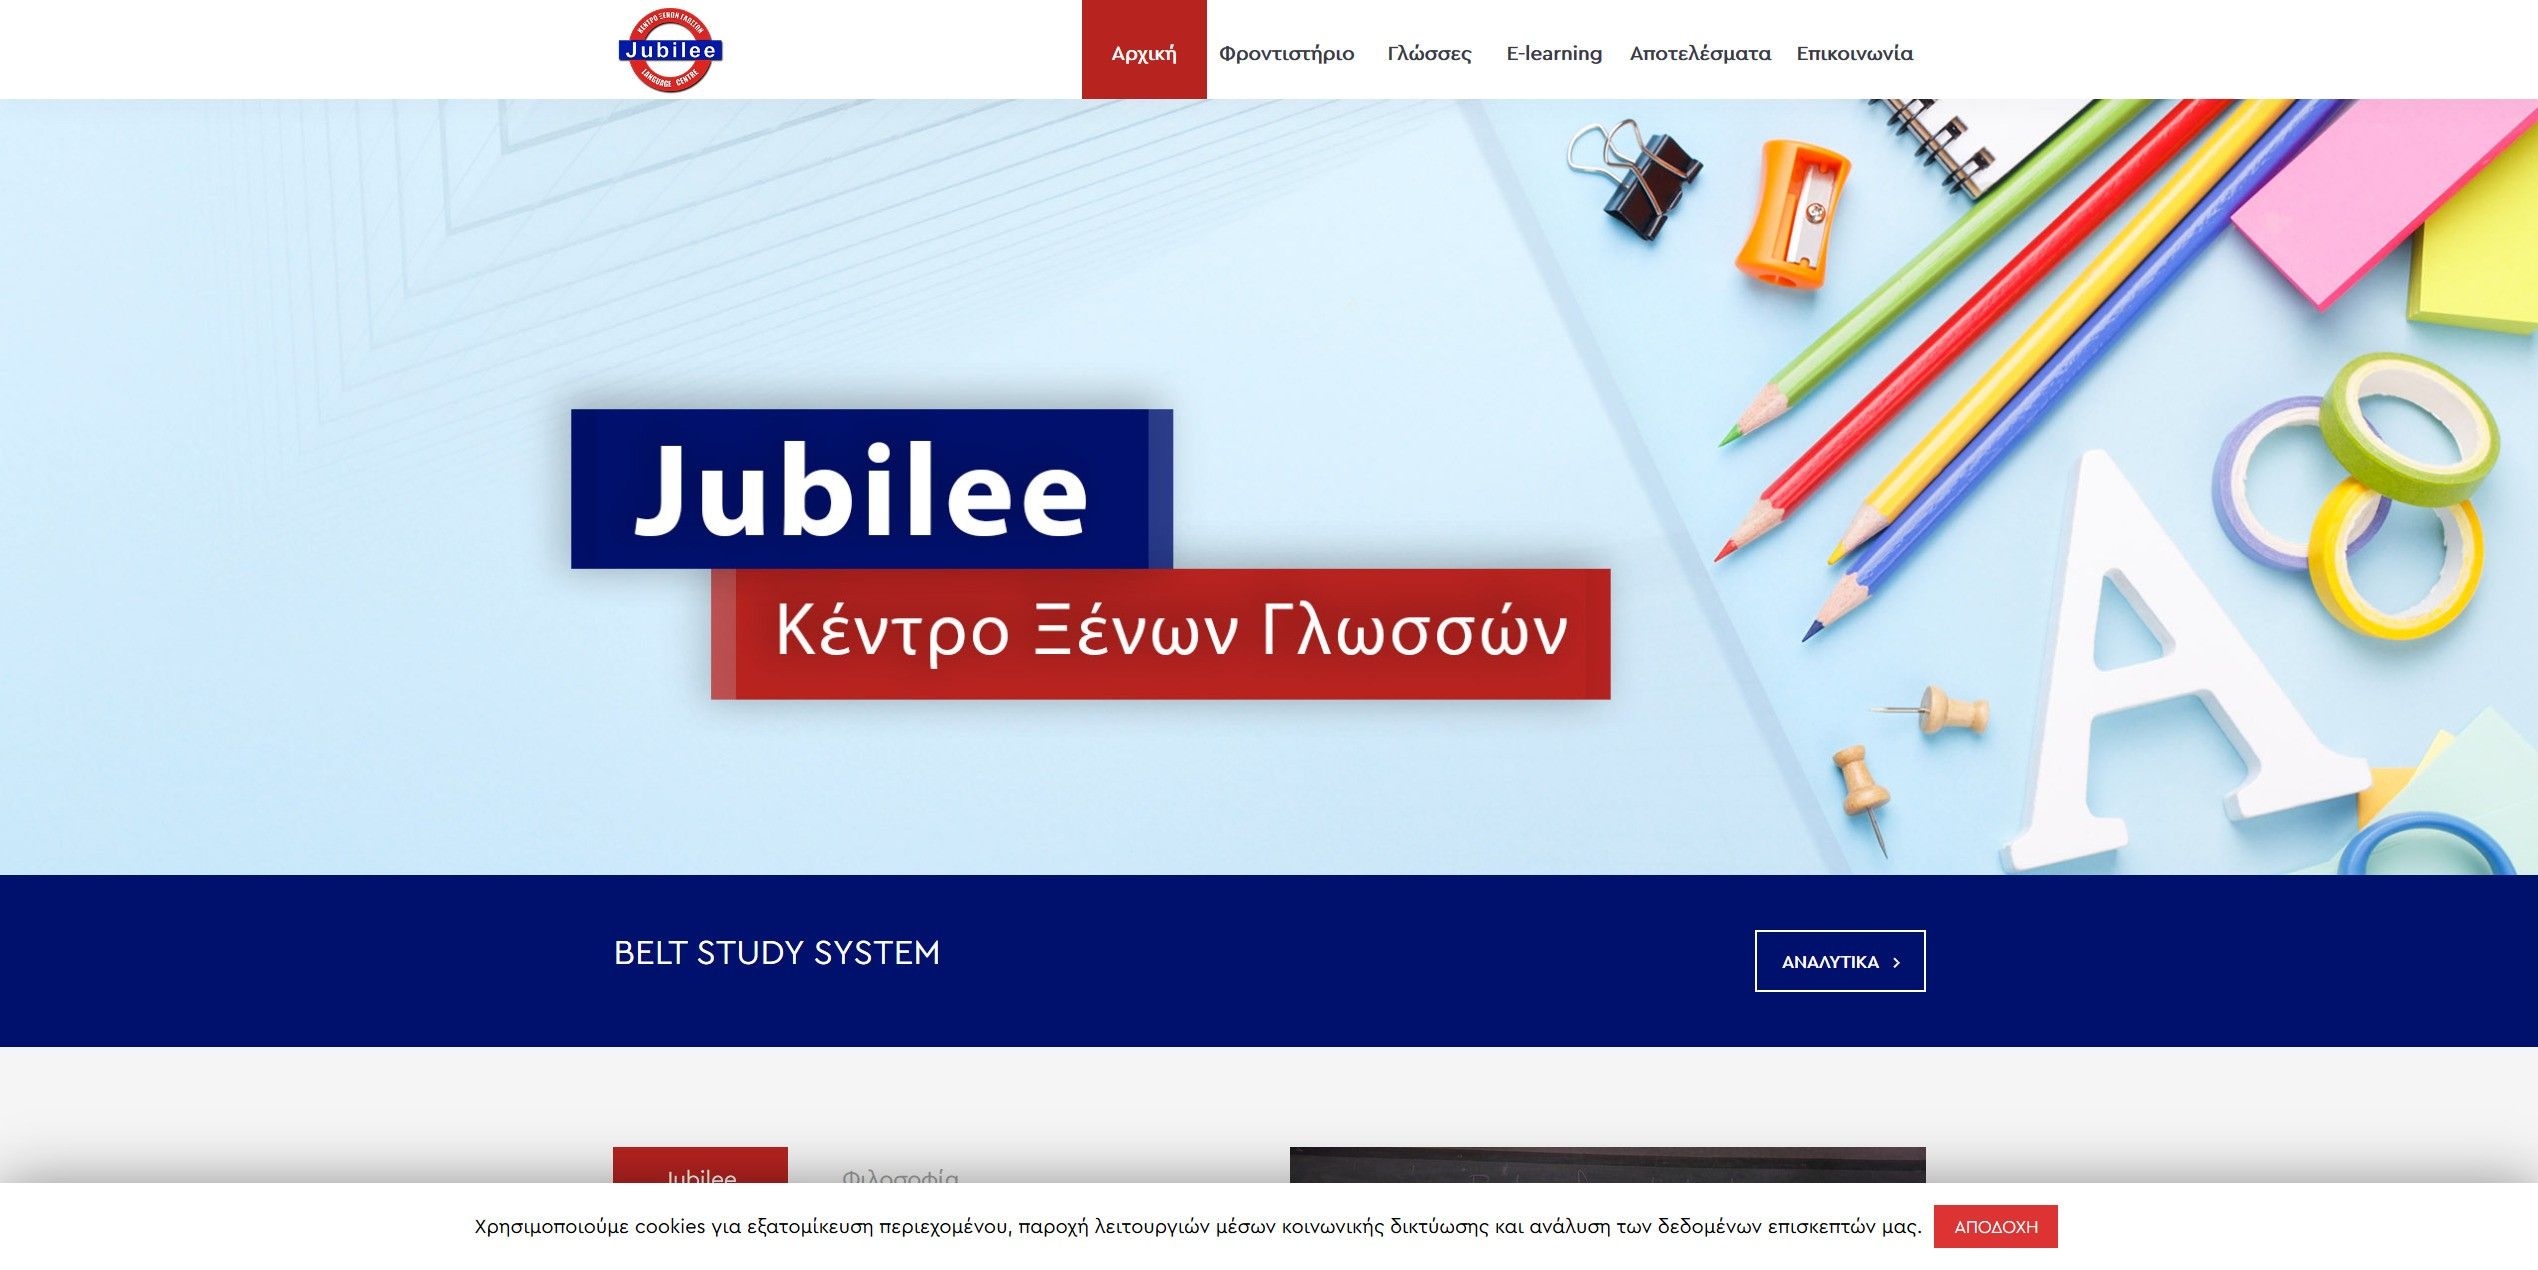 Screenshot 2020 03 29 Jubilee Κέντρο Ξένων Γλωσσών – Κέντρο Ξένων Γλωσσών